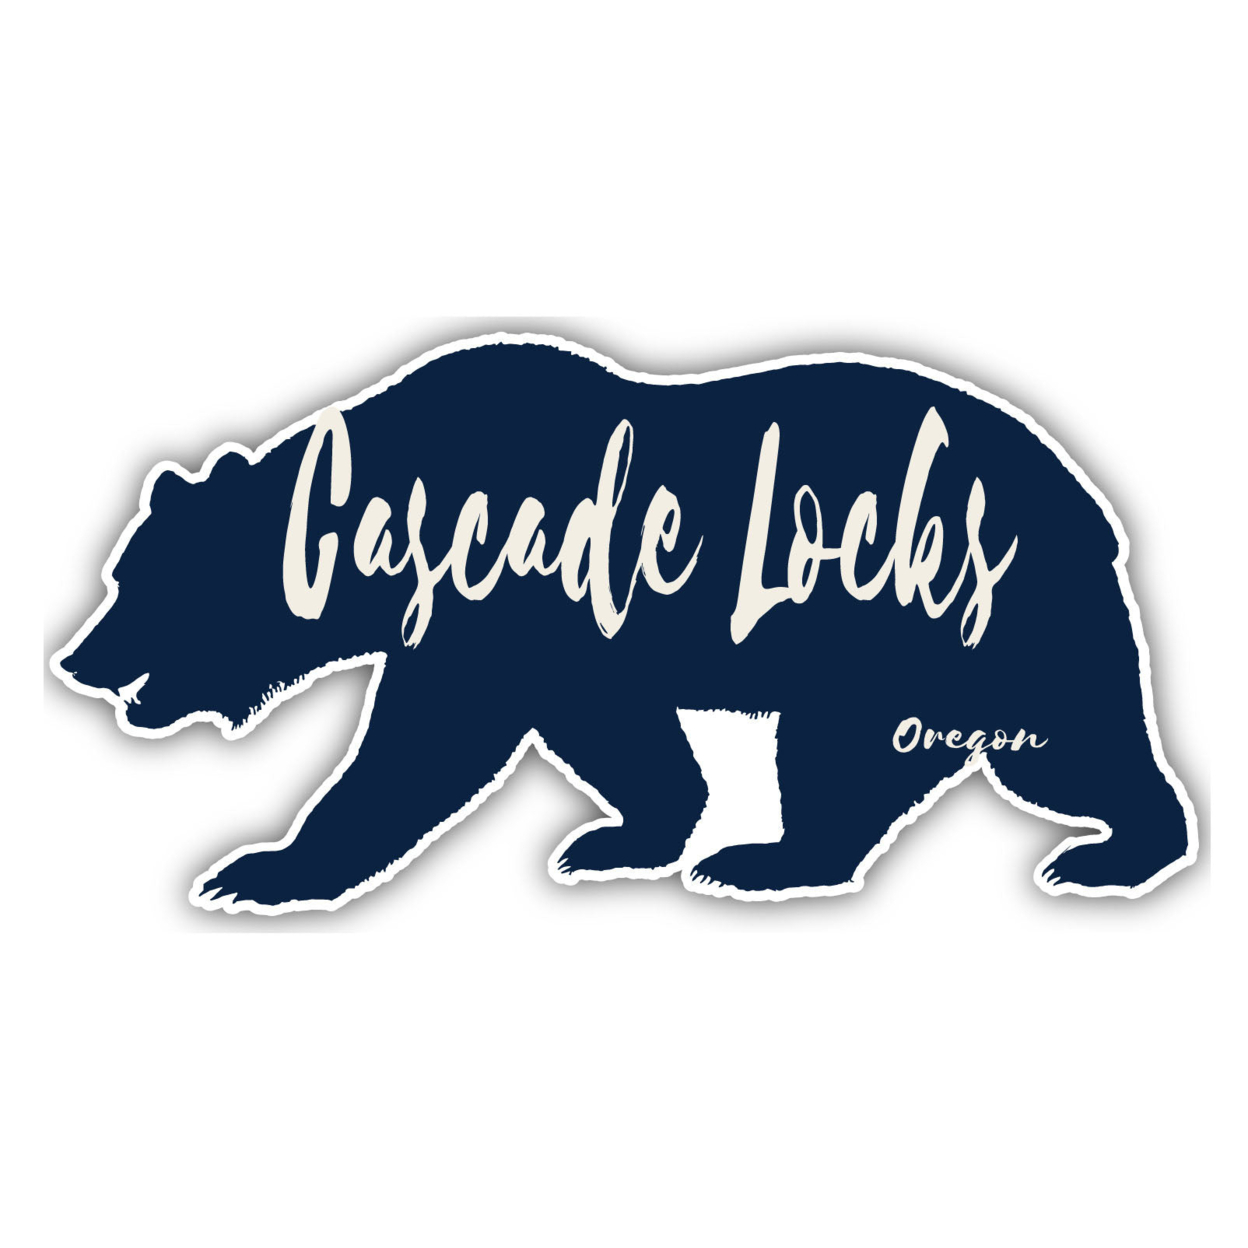 Cascade Locks Oregon Souvenir Decorative Stickers (Choose Theme And Size) - Single Unit, 2-Inch, Adventures Awaits